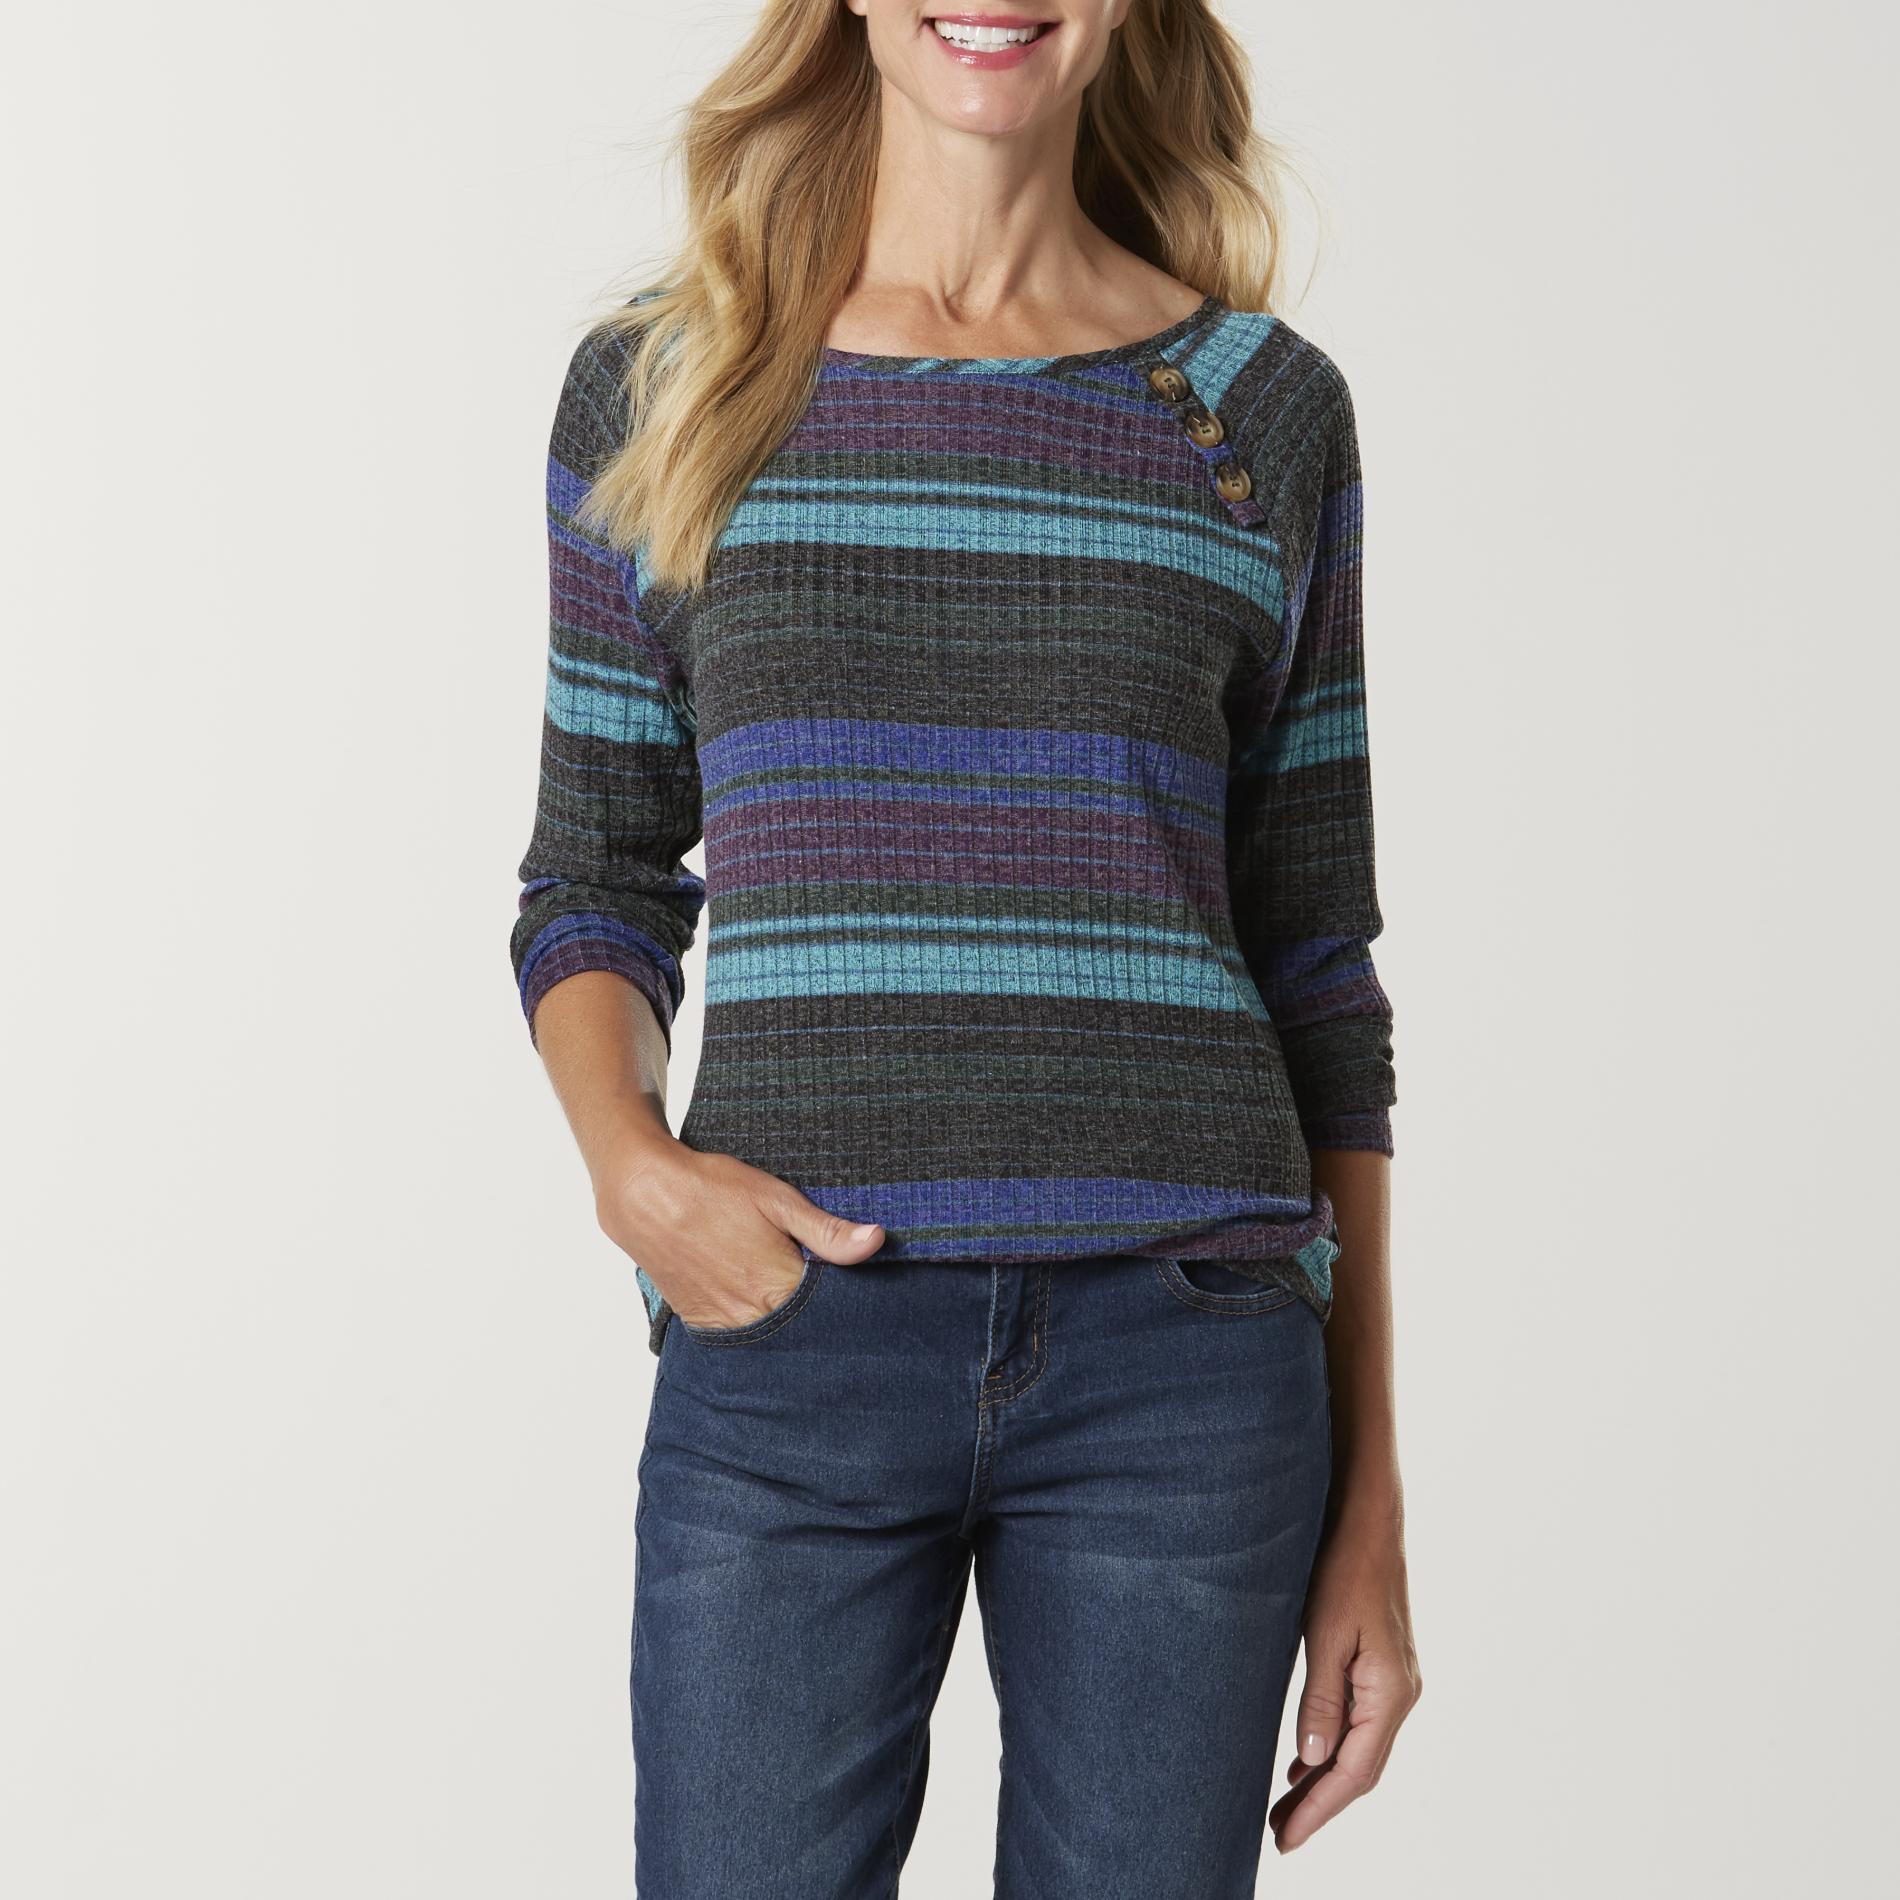 Basic Editions Women's Rib Knit Top - Striped